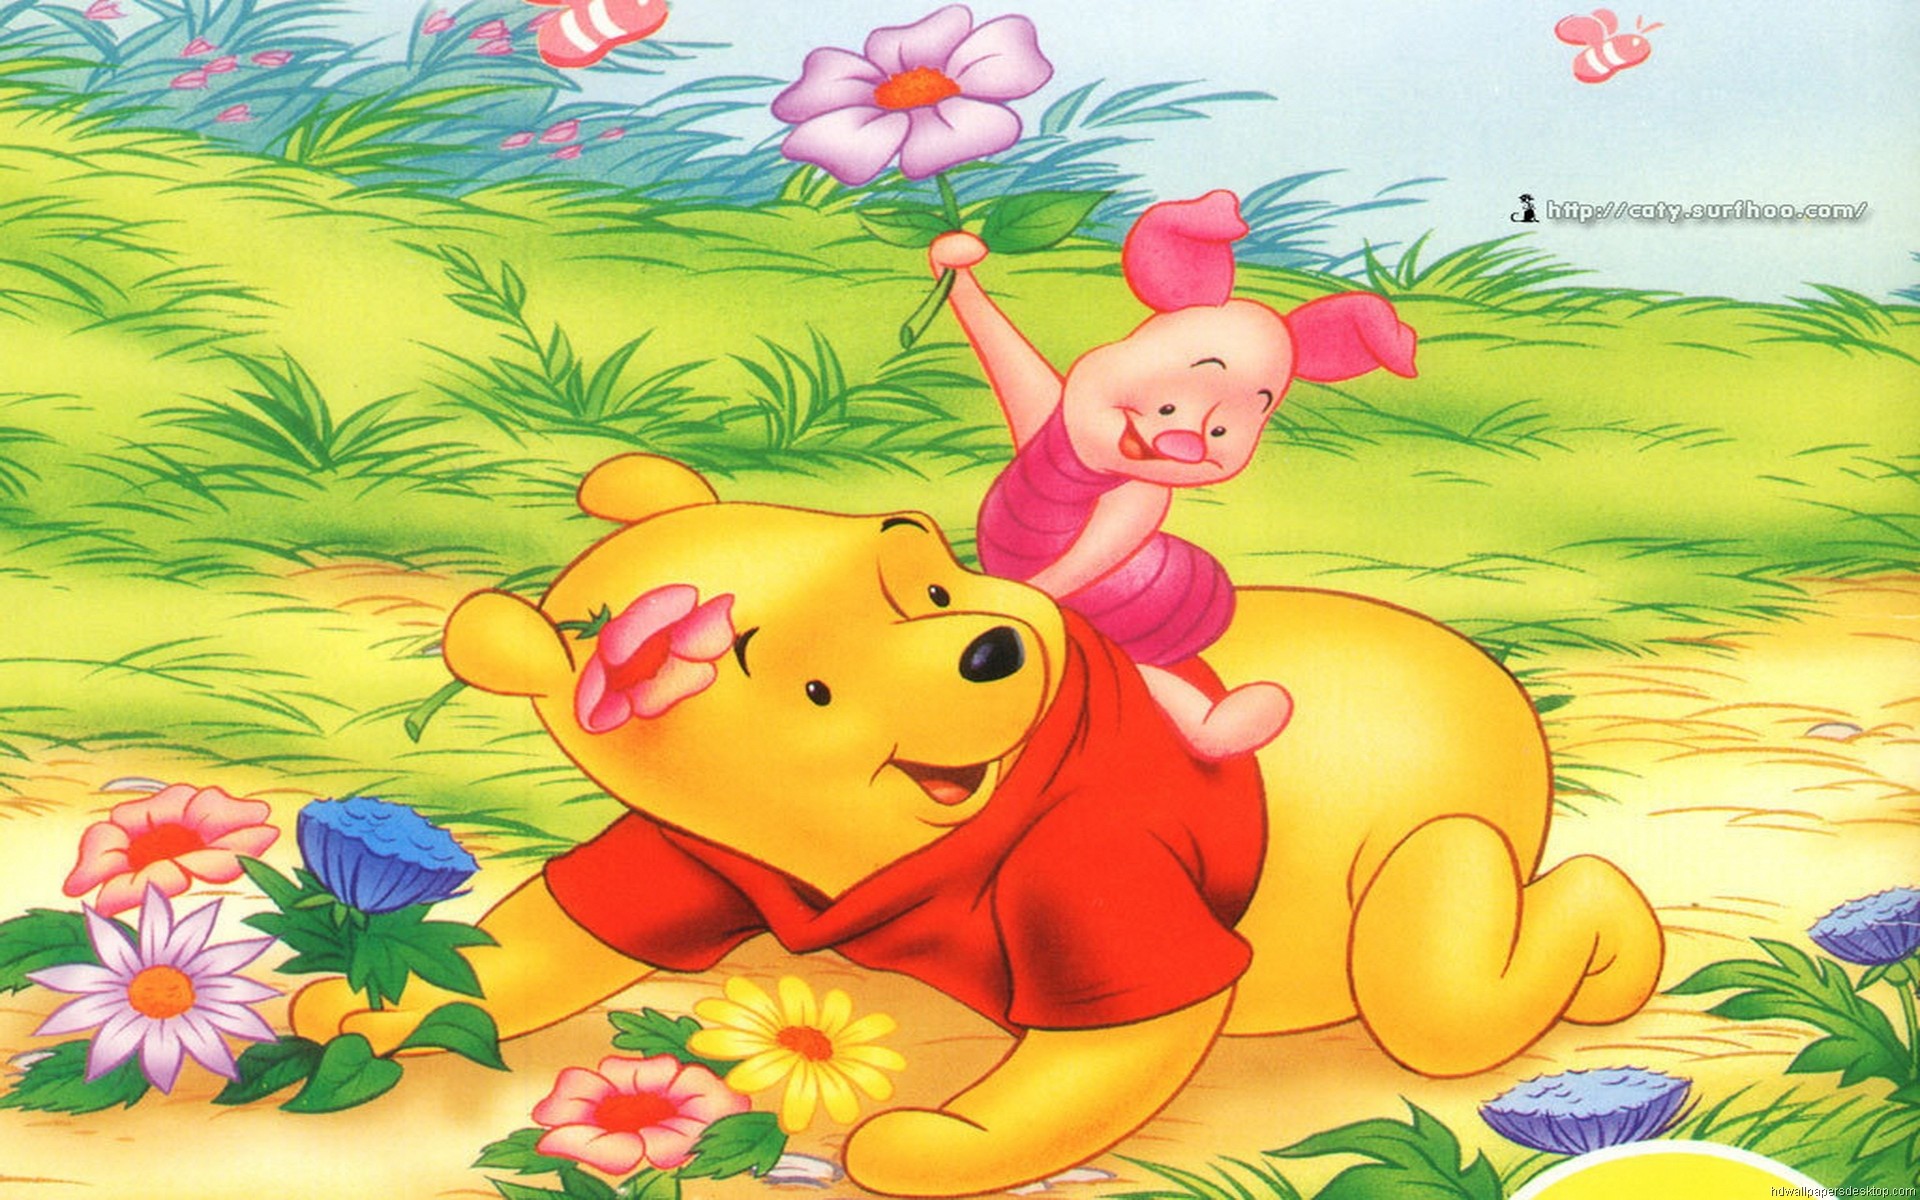 Winnie The Pooh Halloween Wallpapers